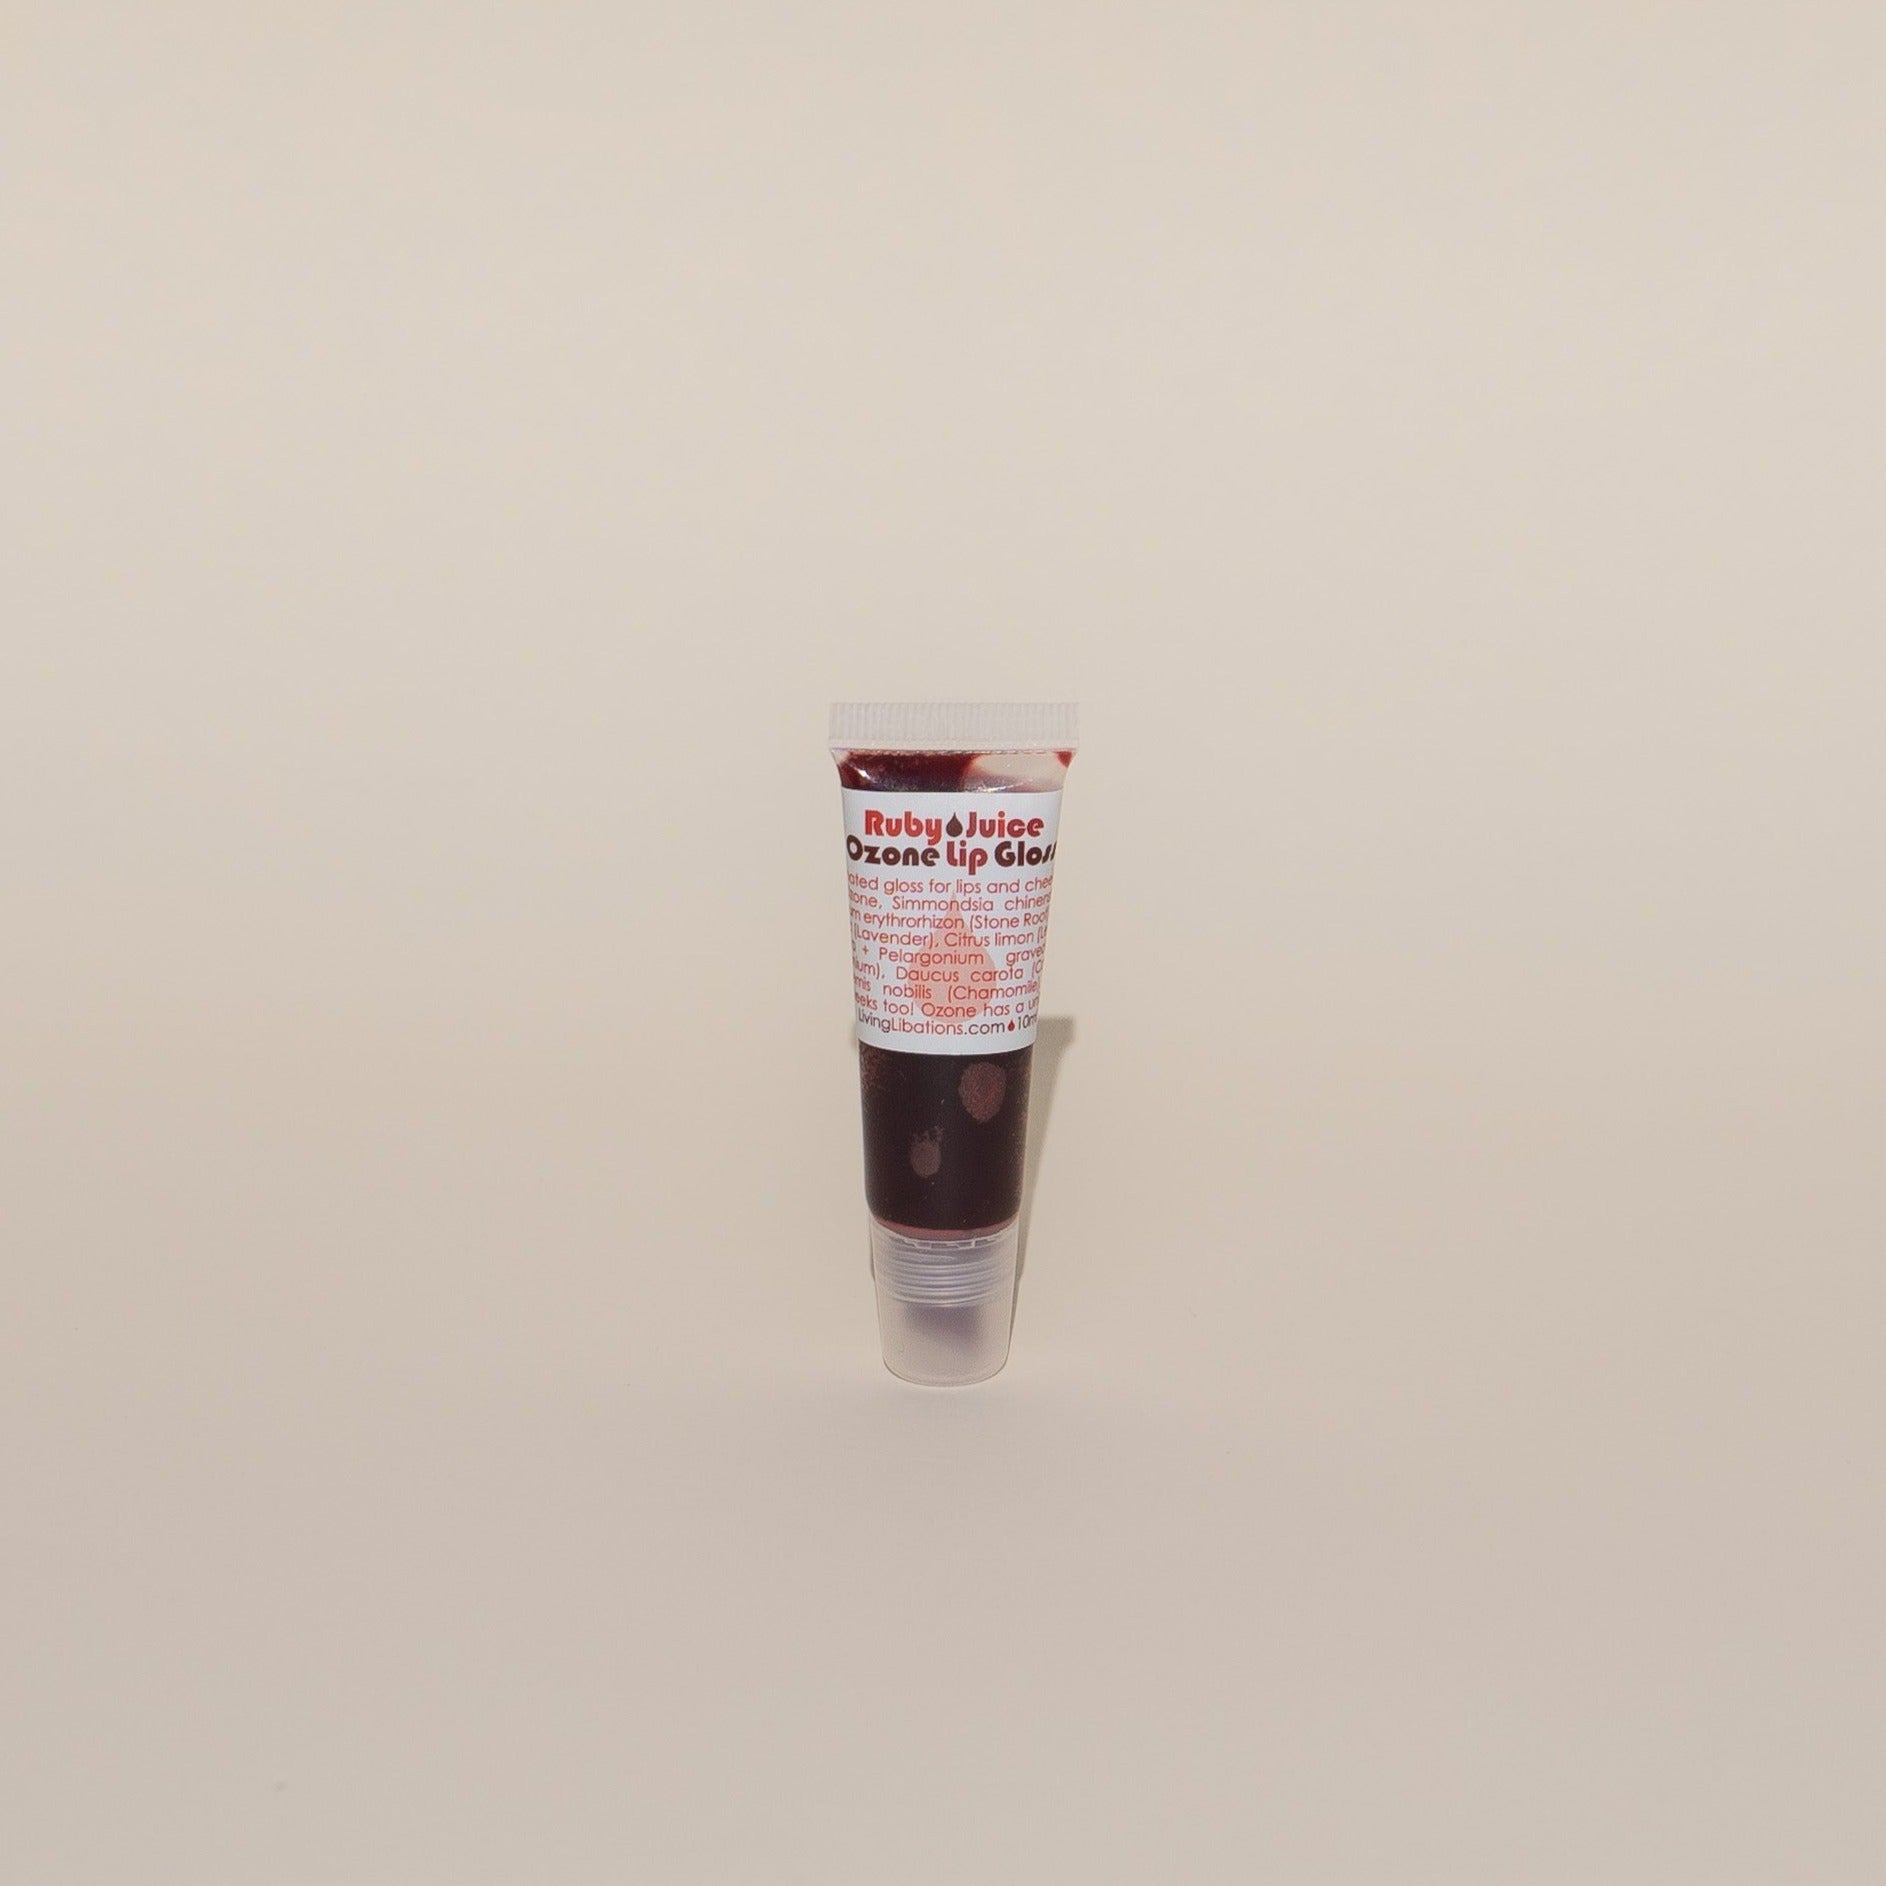 Ruby Juice Ozone Lip Gloss